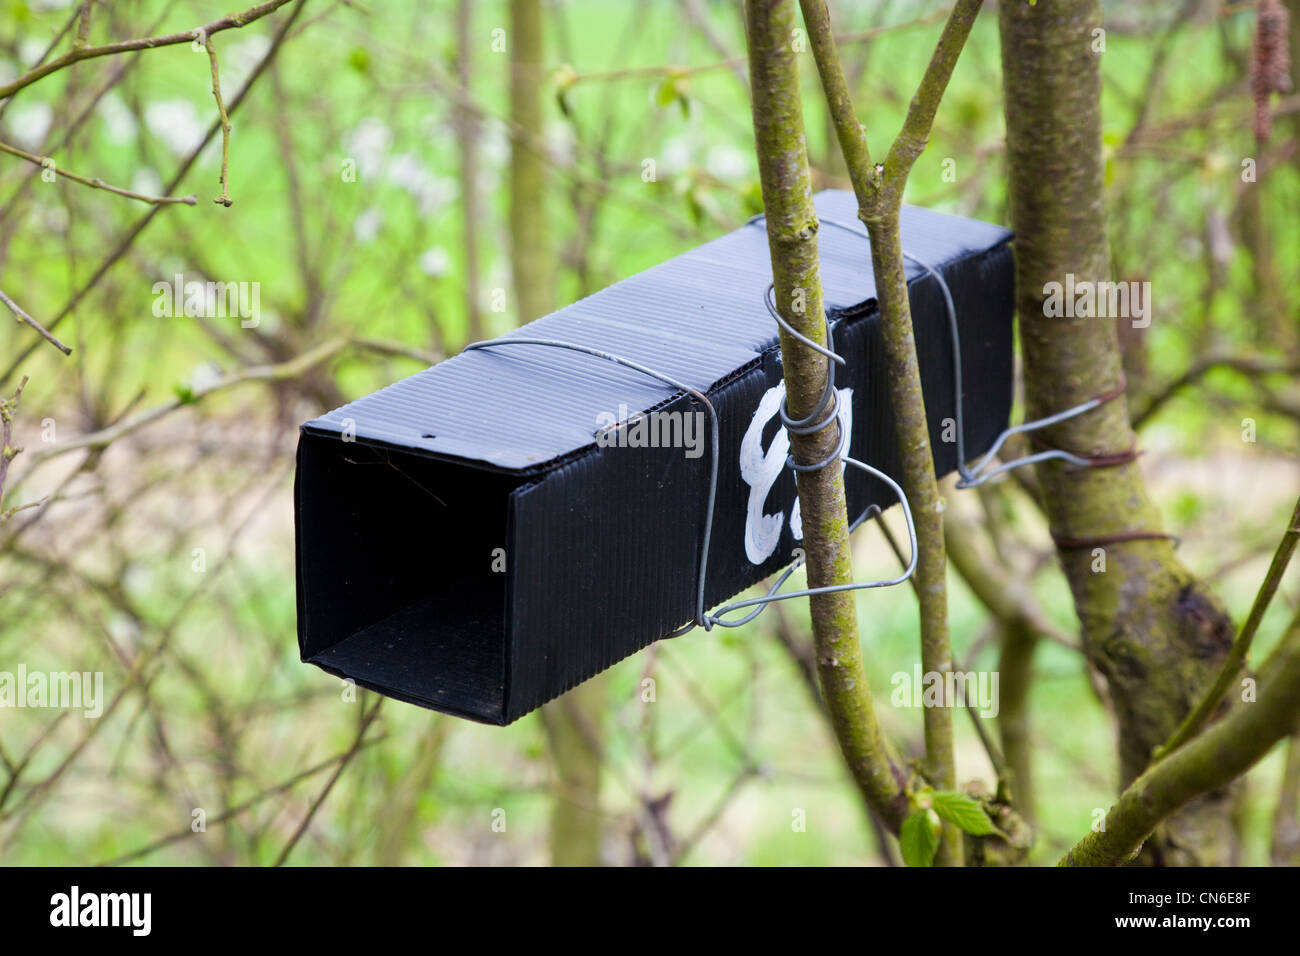 Plastic nest box tube used to survey hedgerow for dormouse (Muscardinus avellanarius), Kent, UK. Stock Photo